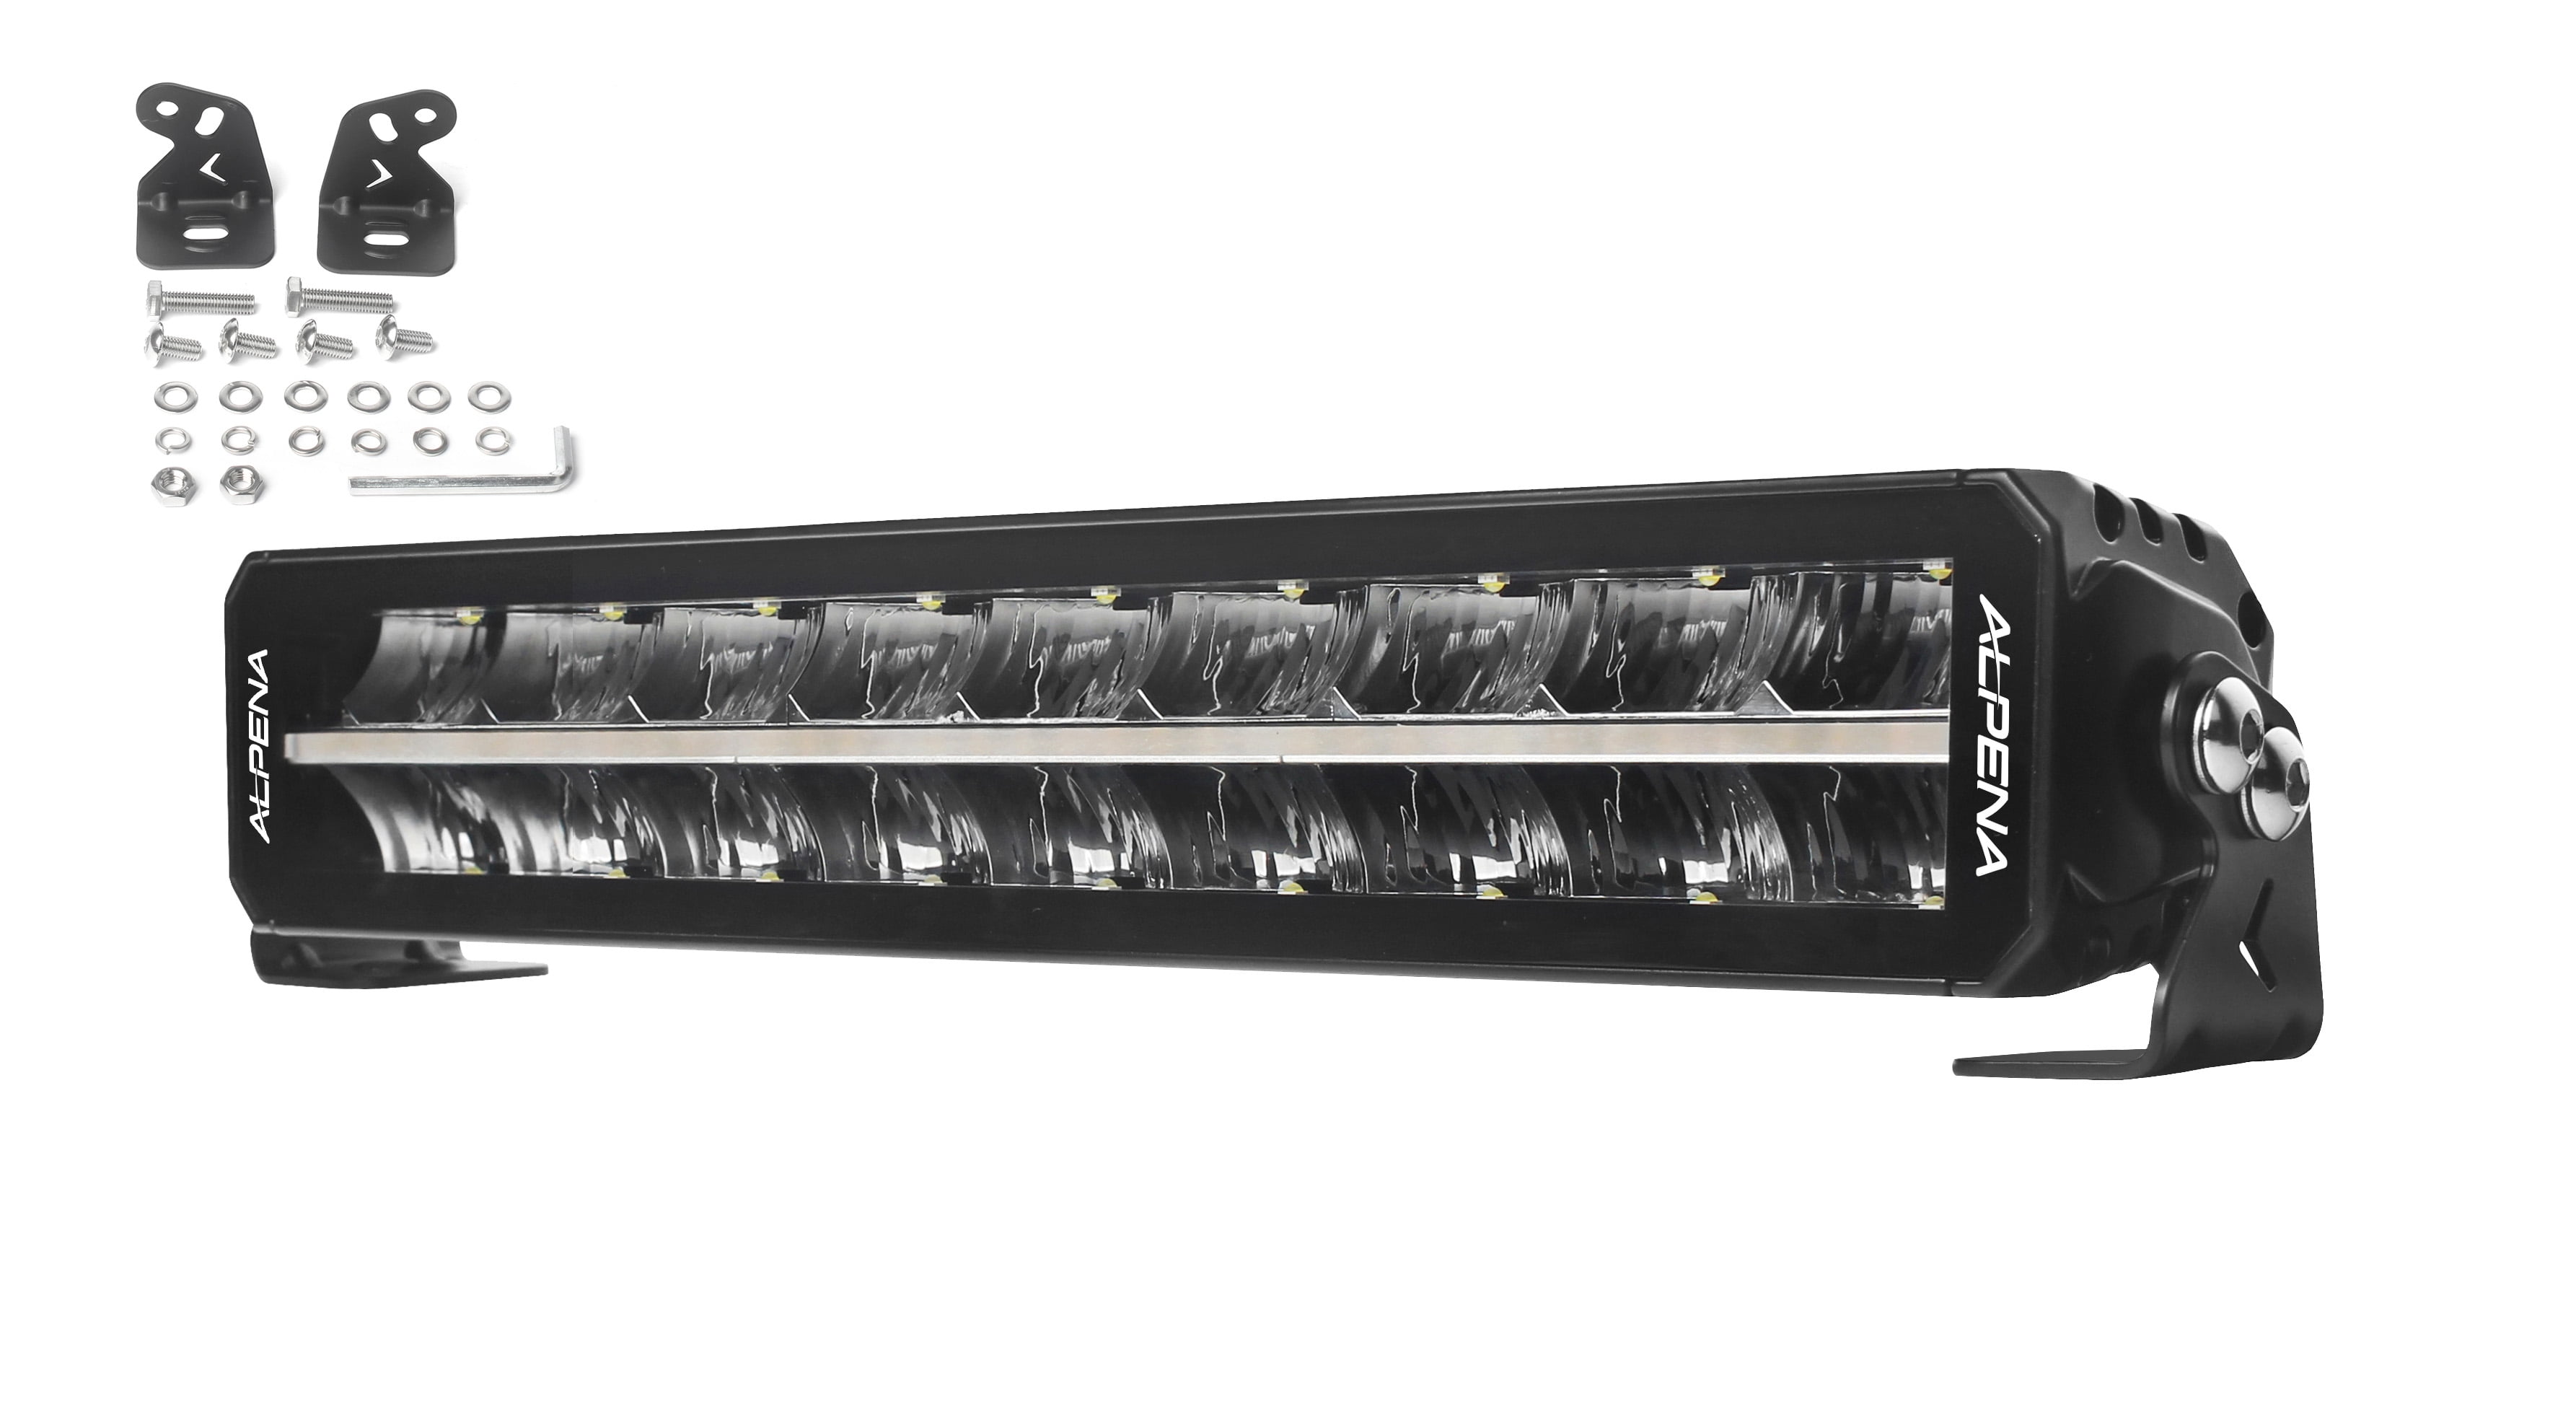 Alpena TrekTec D17P Driving & Accent LED Light Bar, 12V, Model 71069, Fit Type - Universal for Cars, Trucks and SUVs